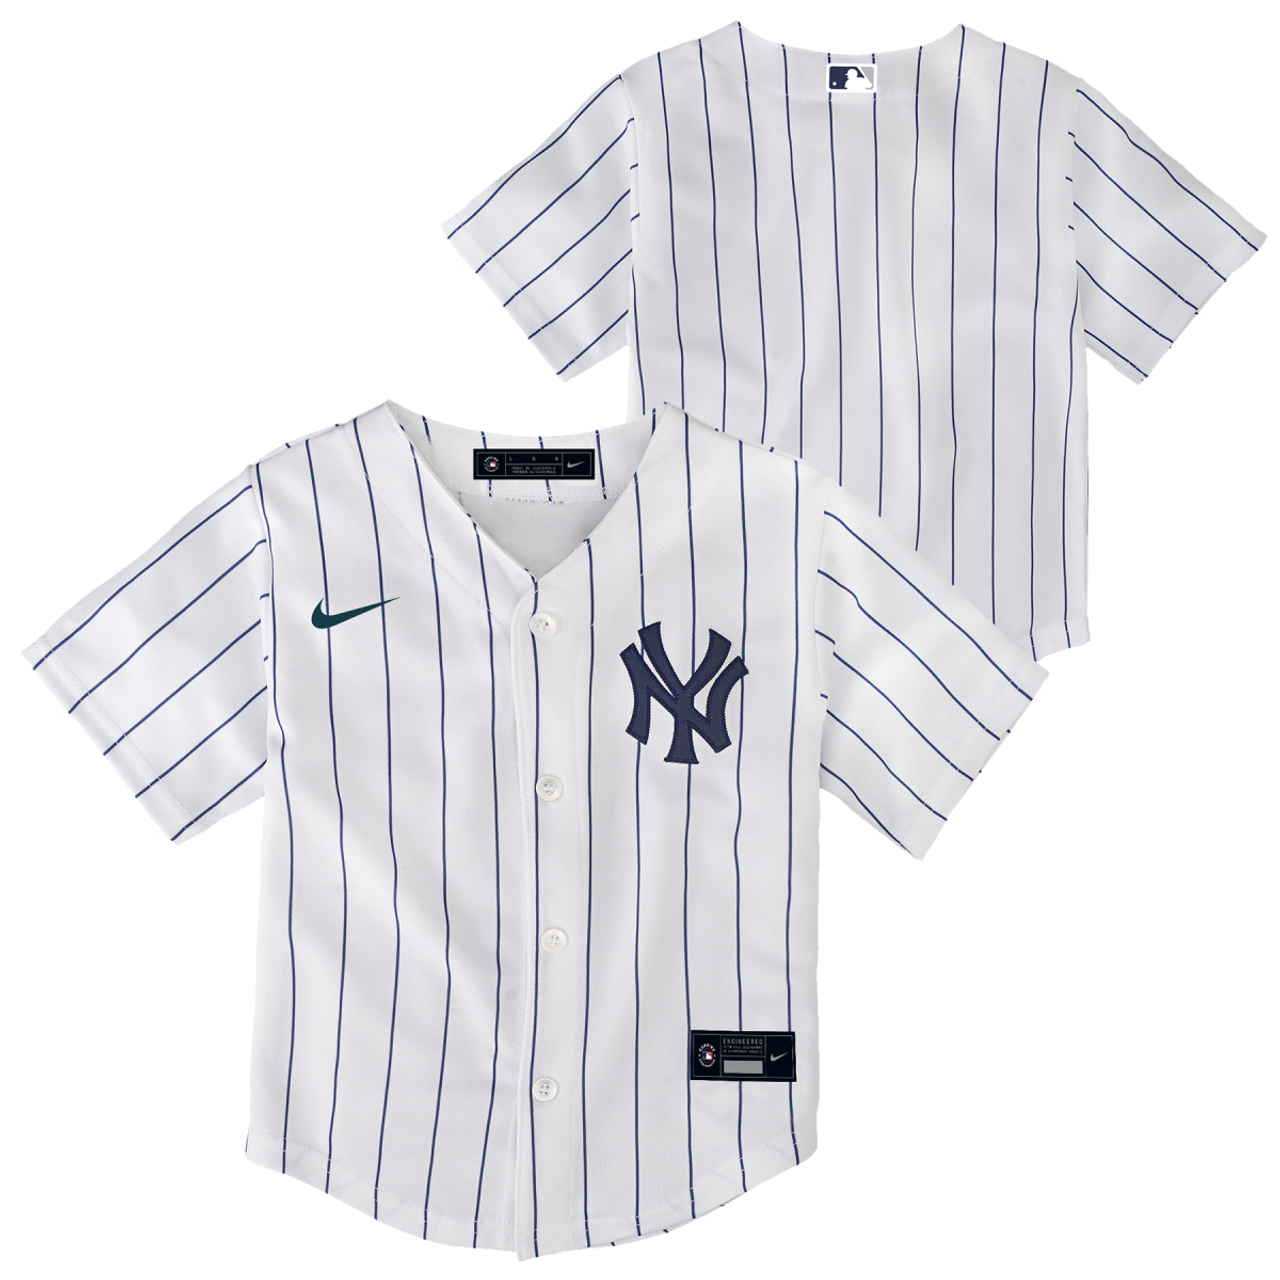 New York Yankees Toddler Replica Jersey - Navy Blue / 3T